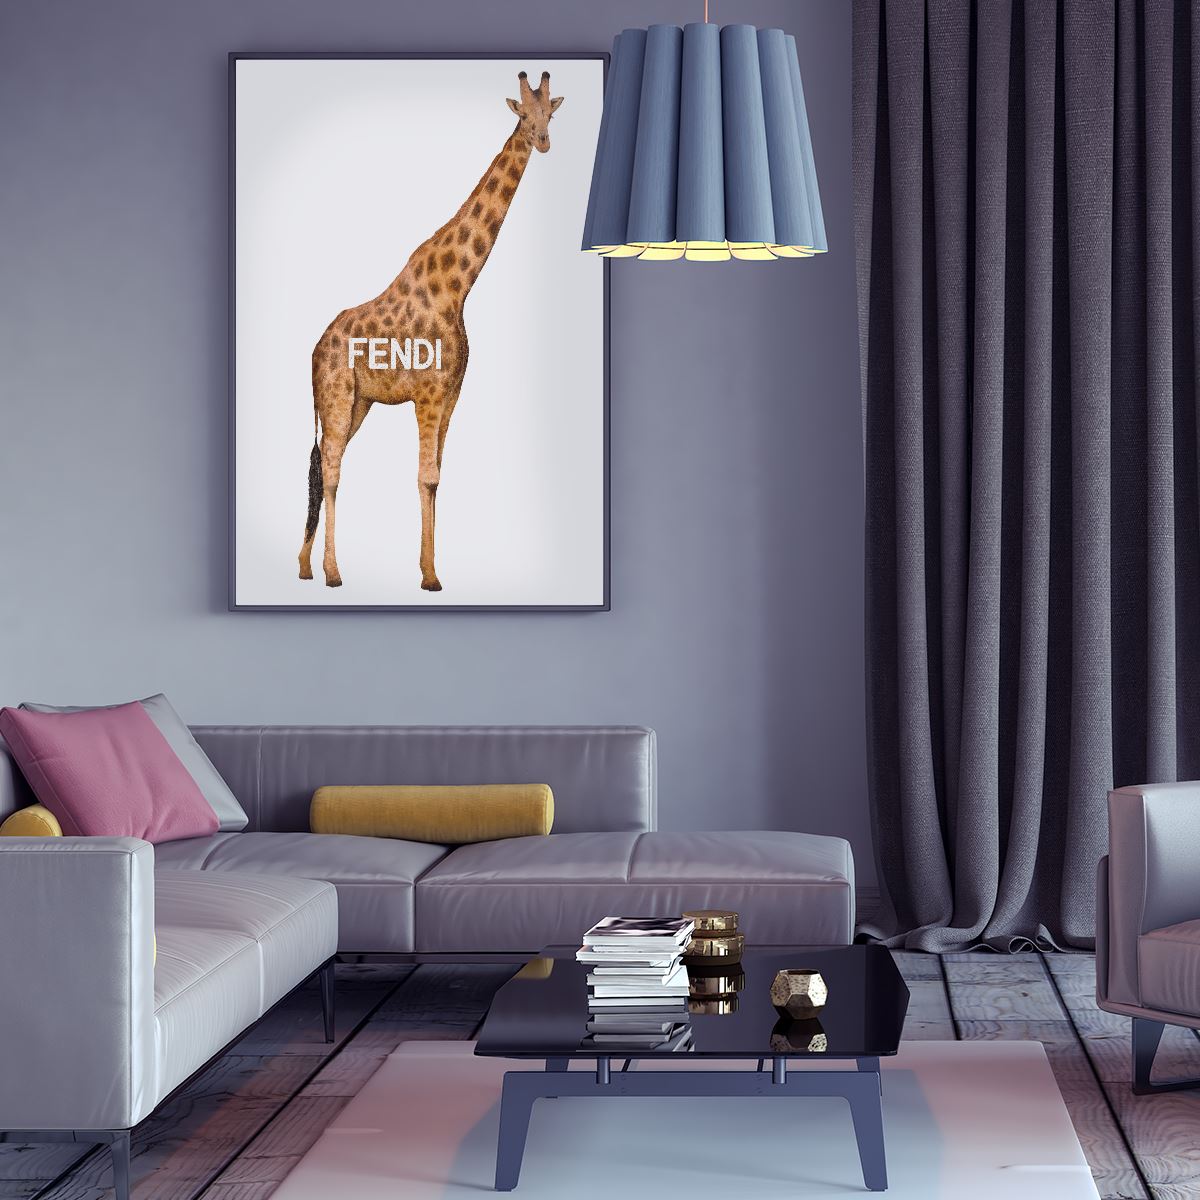 Fendi Giraffe